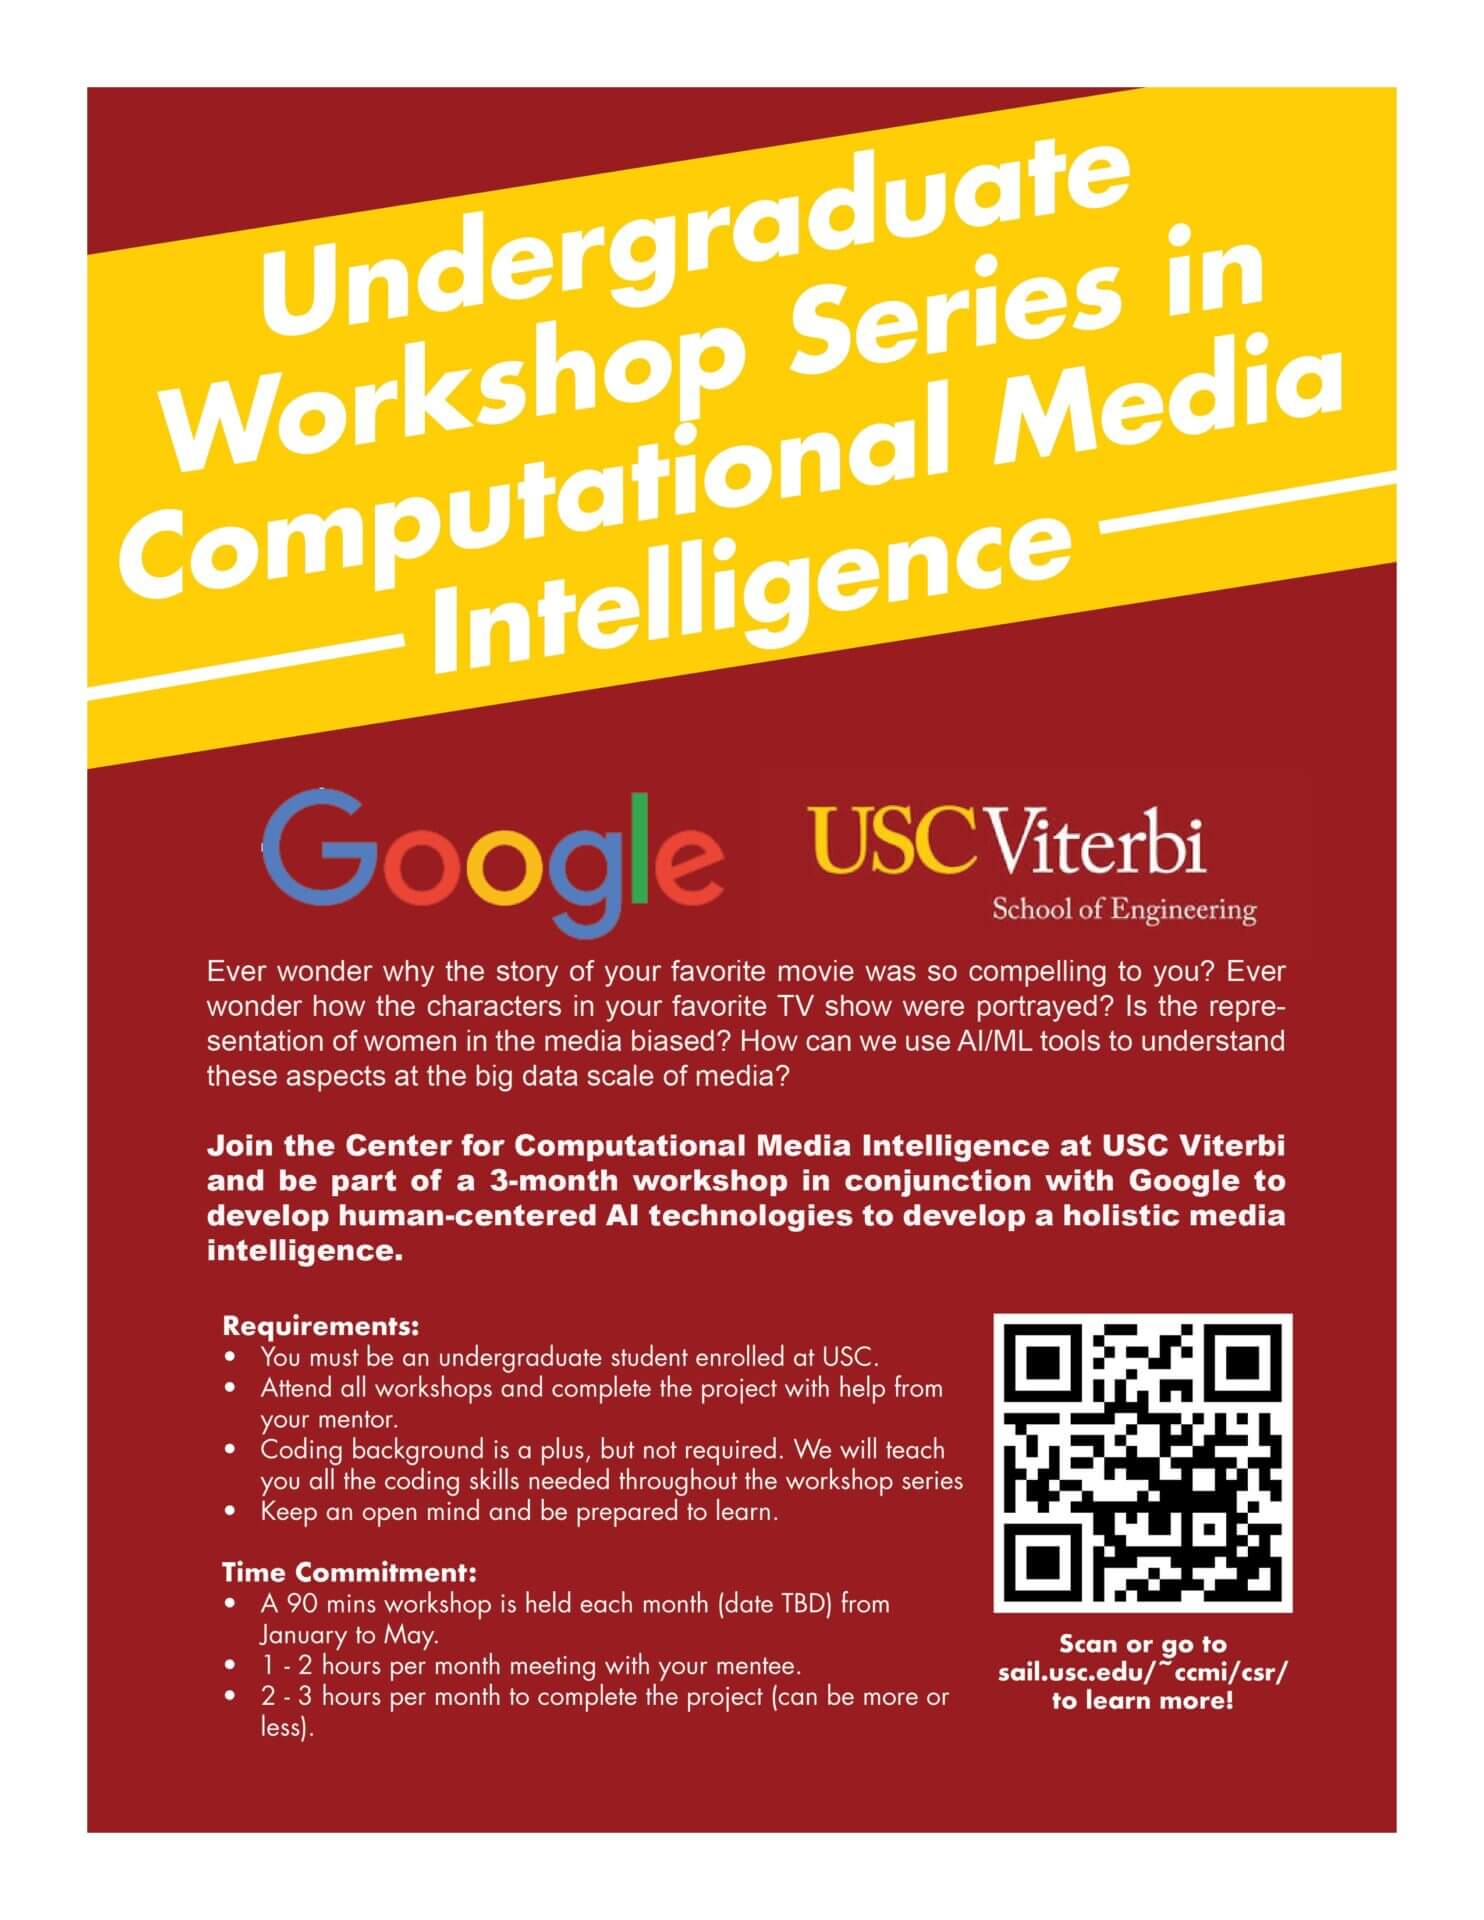 Featured image for “Undergraduate Workshop Series in Computational Media Intelligence”